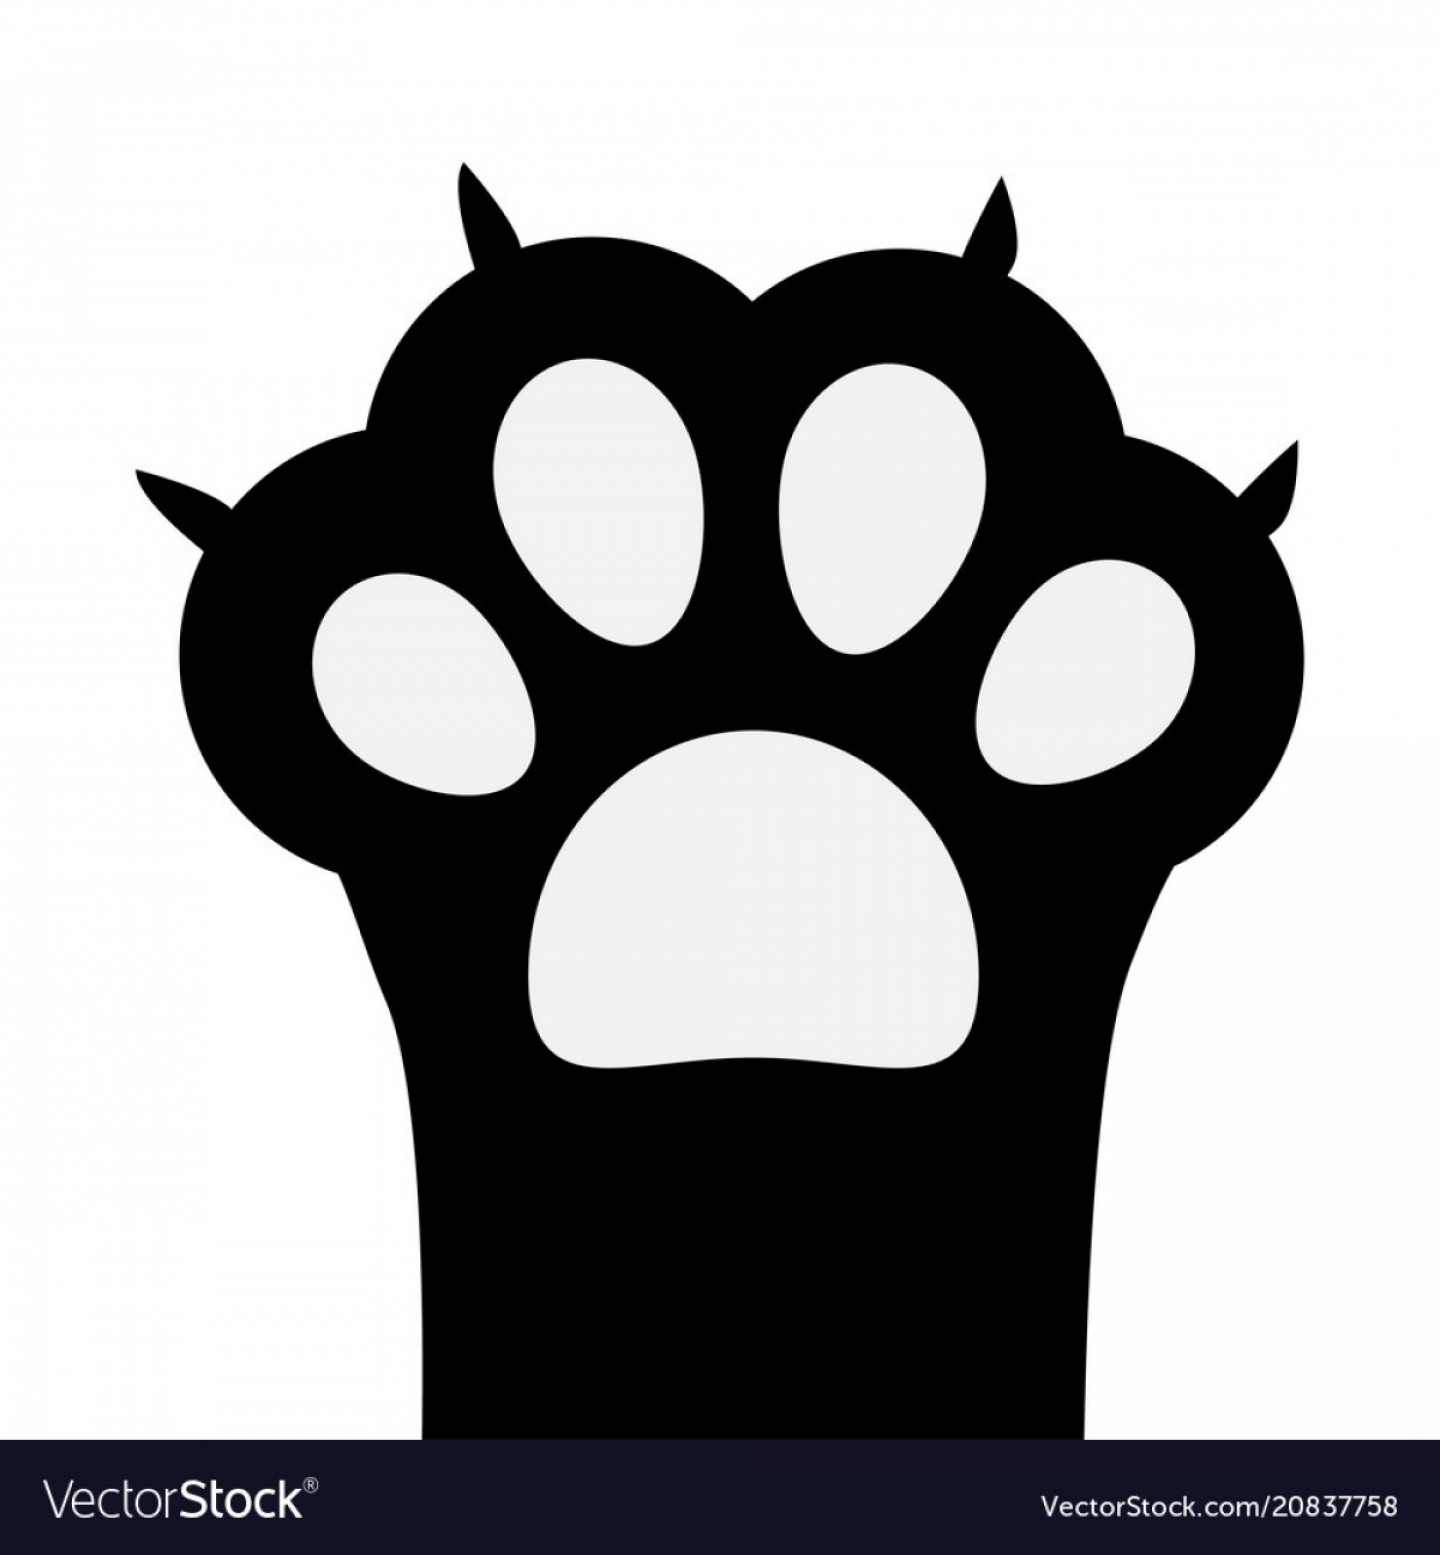 Cat paw print clipart vector pictures on Cliparts Pub 2020! ð